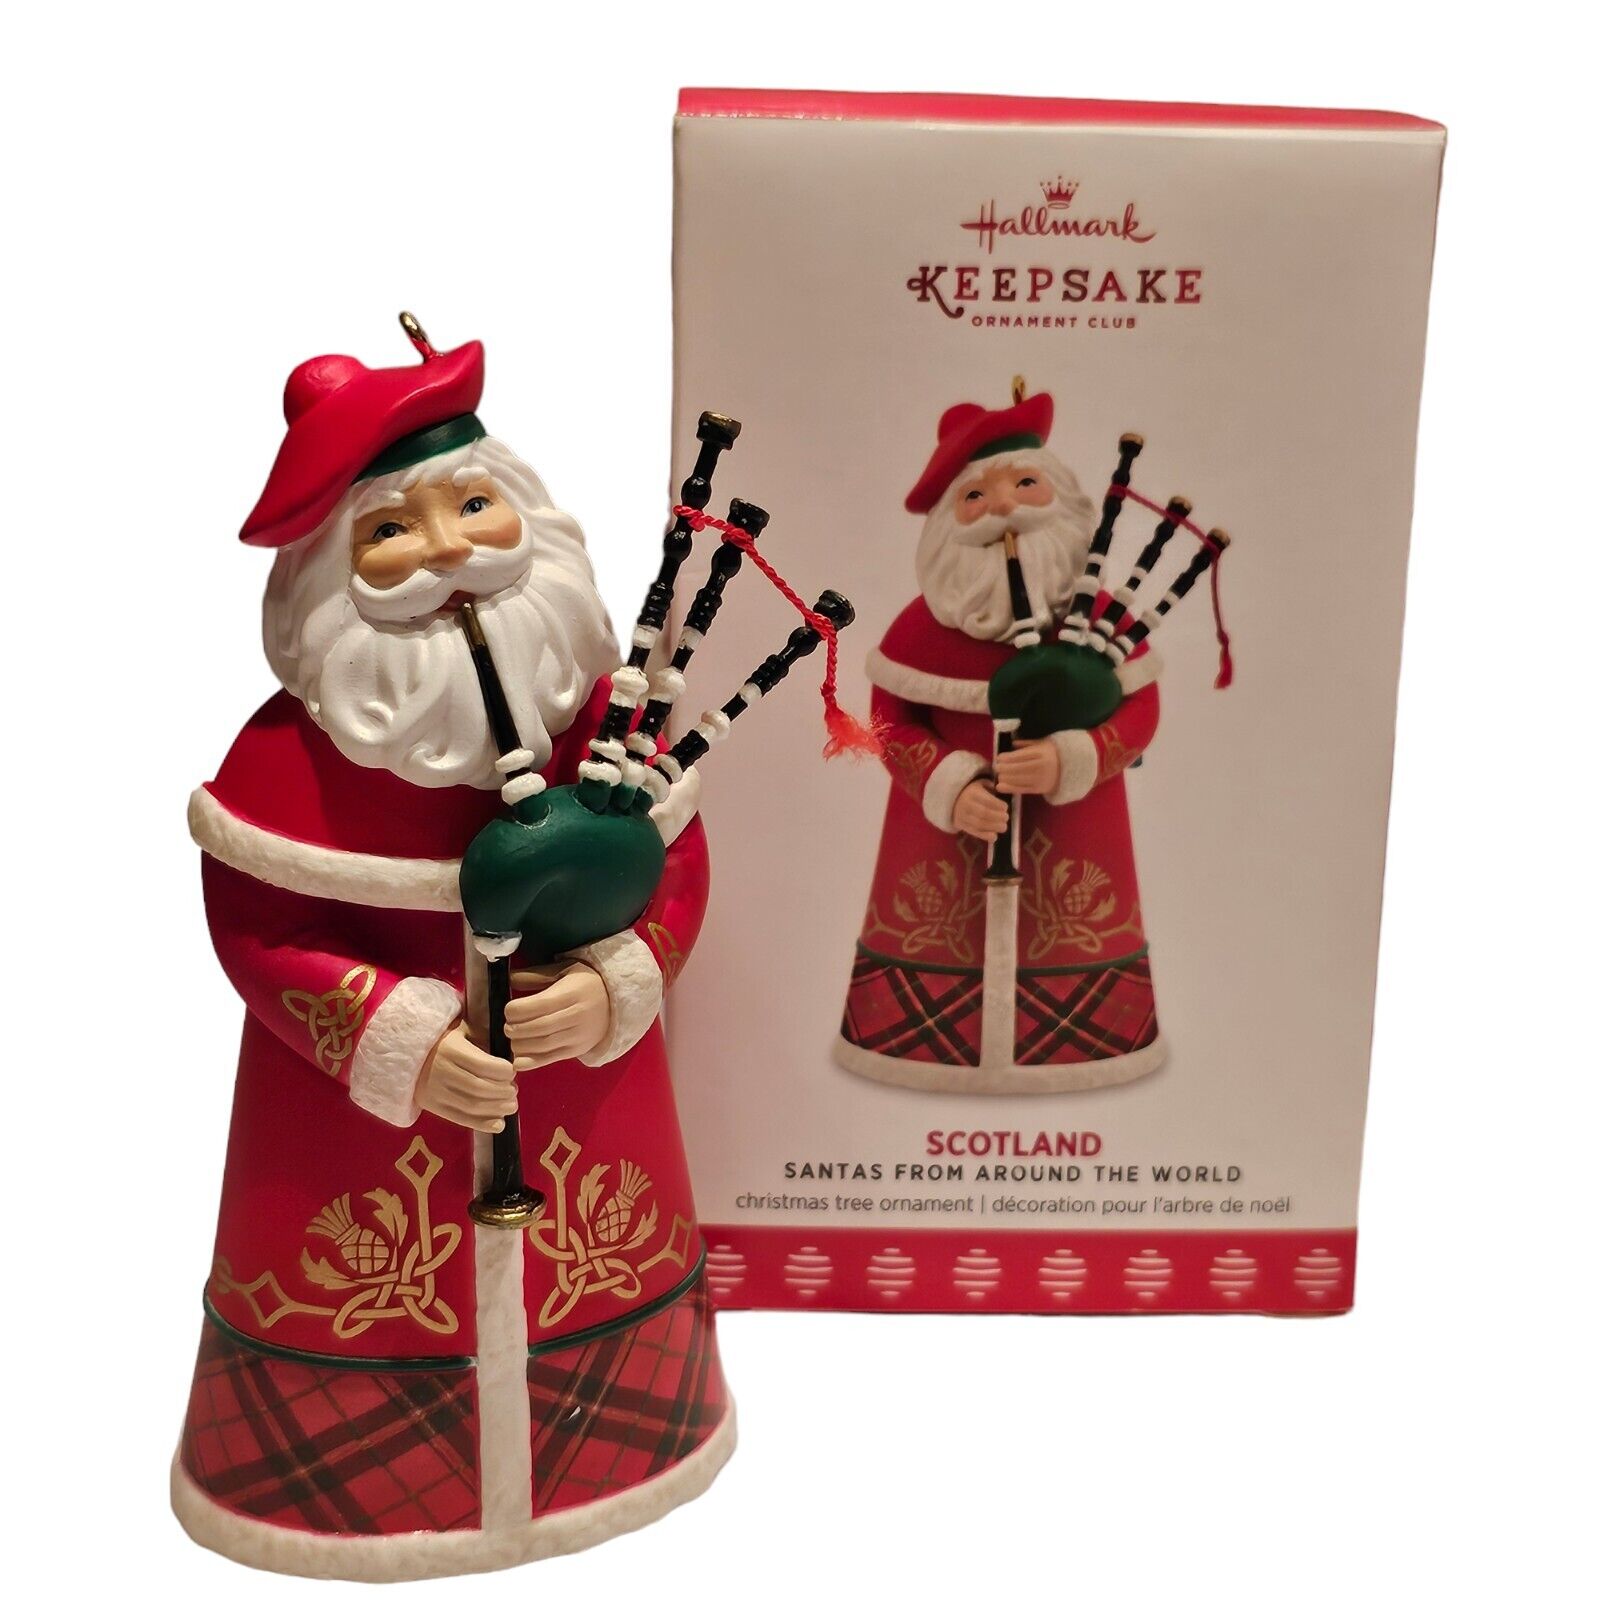 2017 Hallmark Keepsake Scotland Santas From Around the World Christmas Ornament